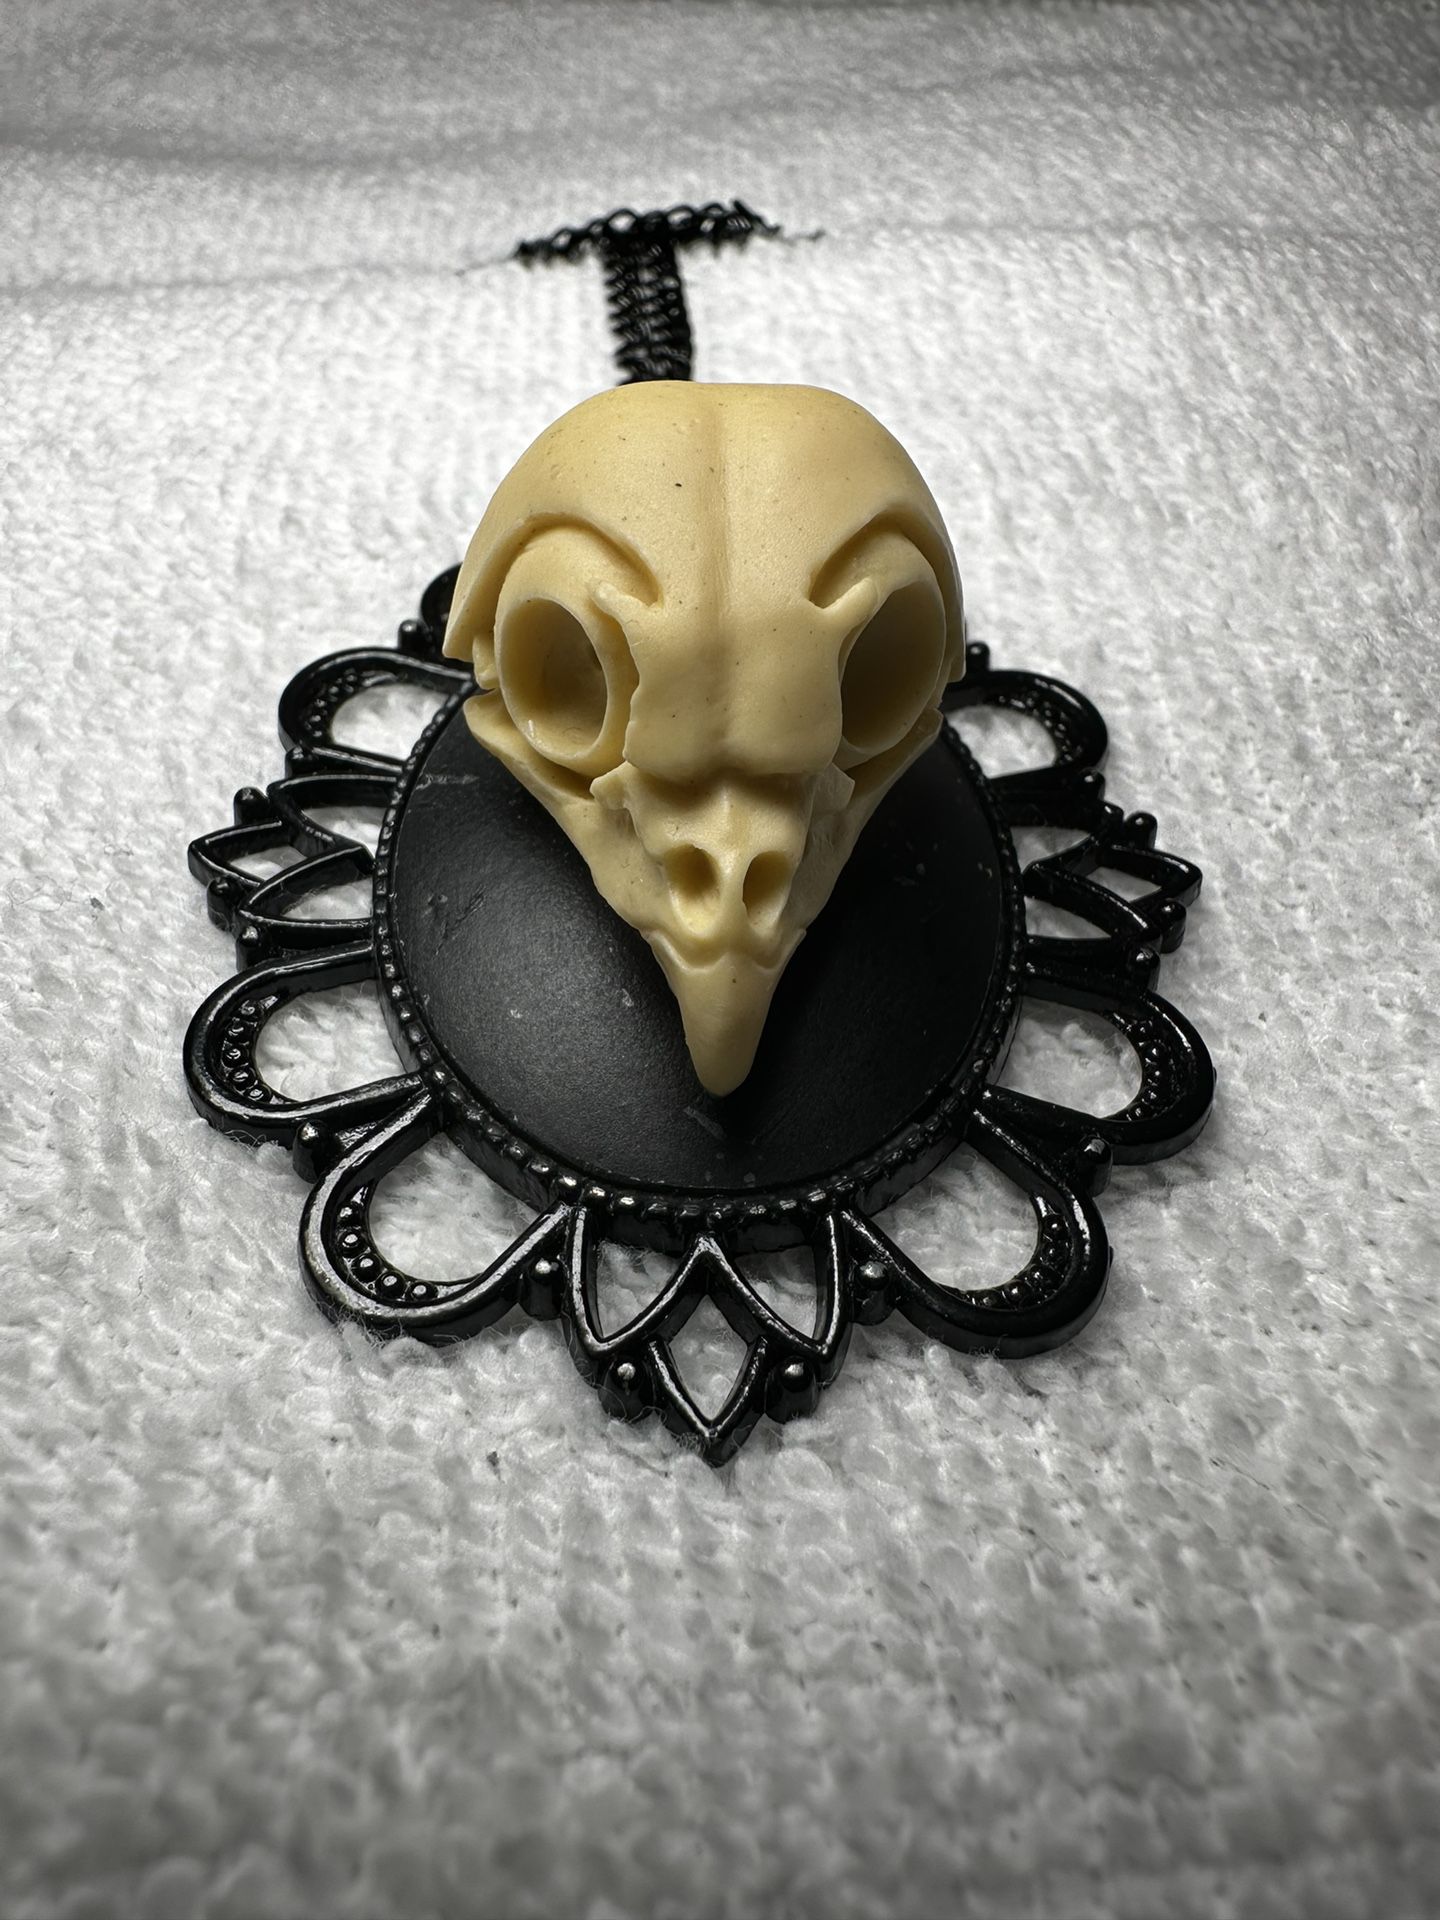 OWL - Animal Skull - RESIN REPLICA - Pendant / Necklace